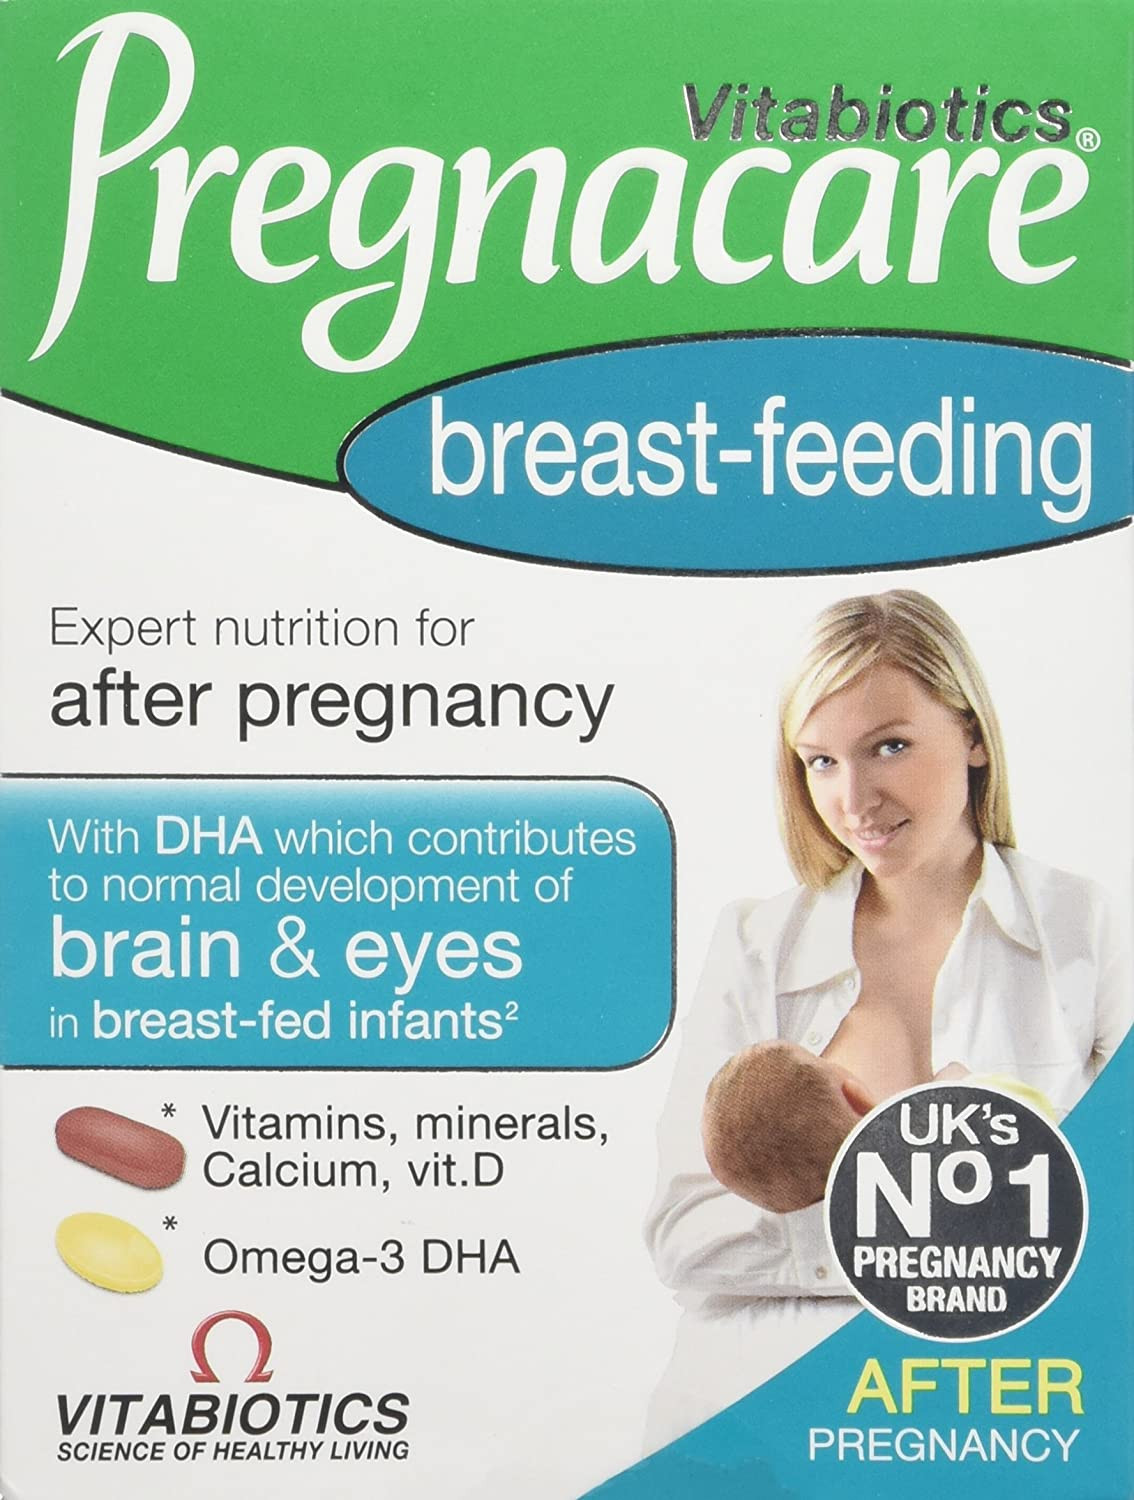 Vitabiotics Pregnacare Breastfeeding Dual Pack - 56 Tablets and 28 Capsules